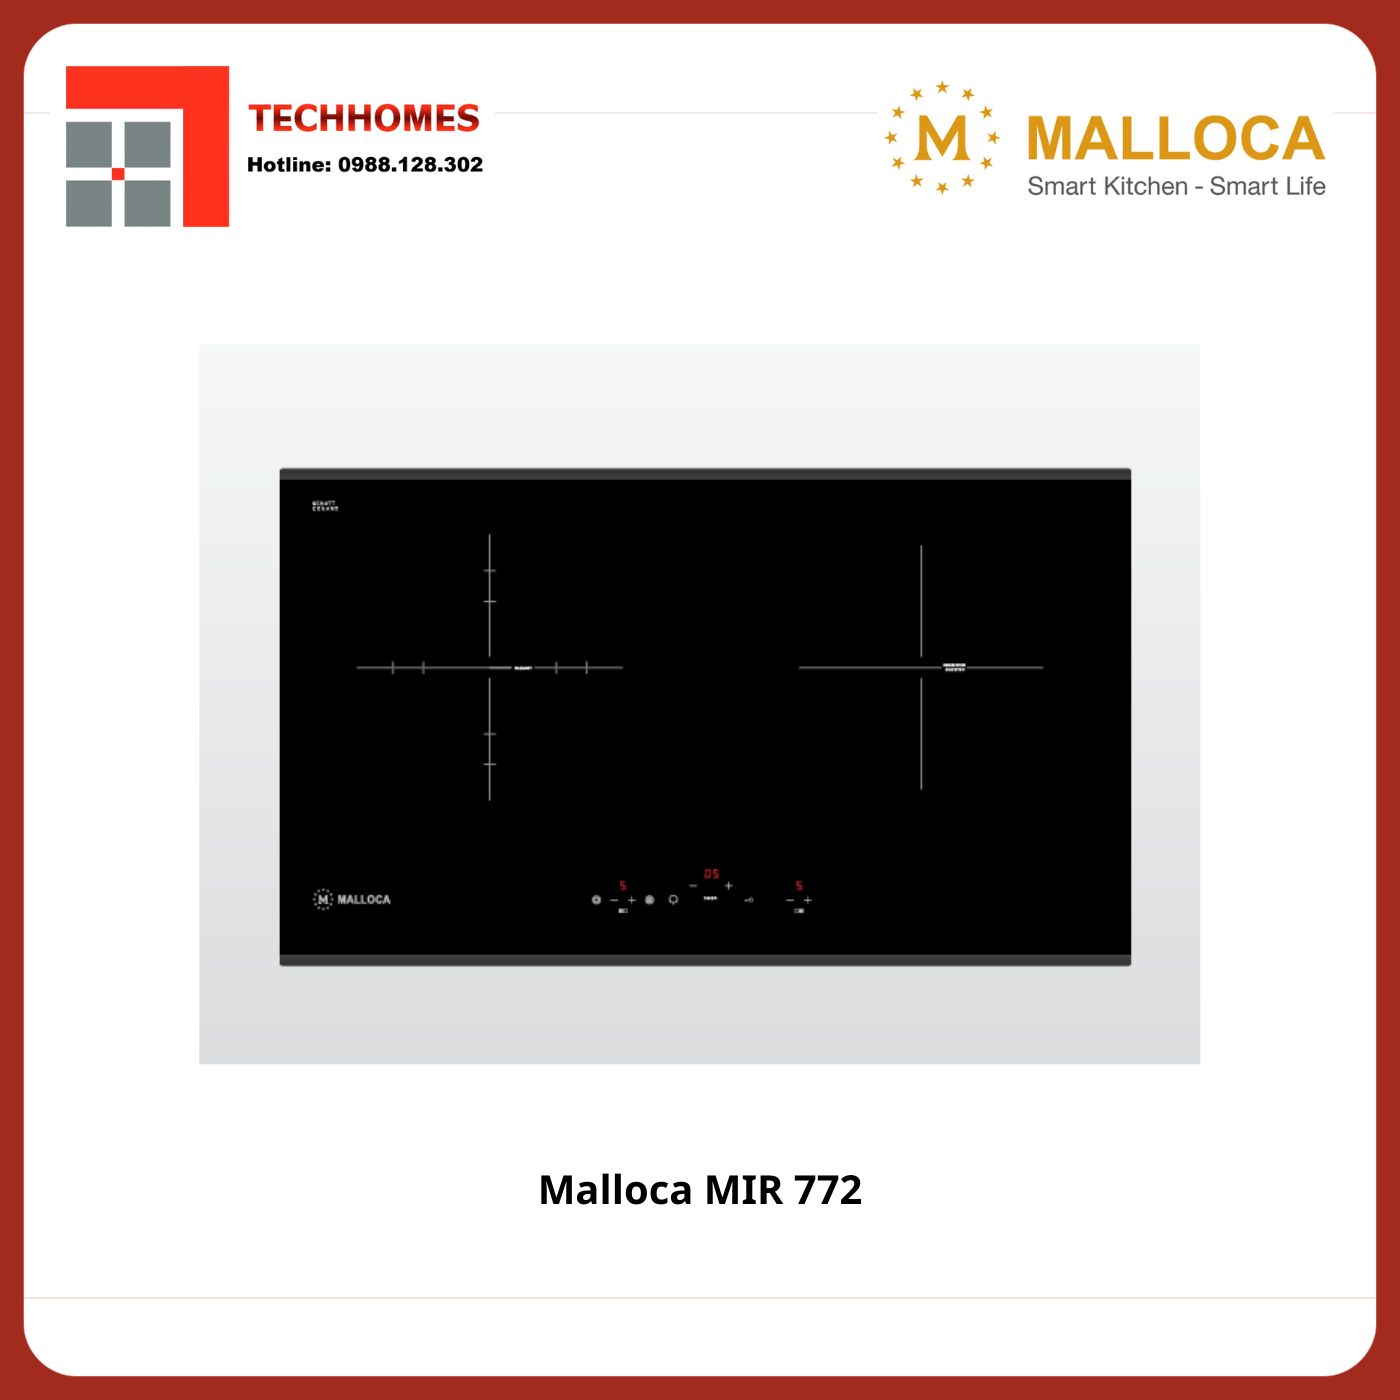 Bếp điện từ 2 vùng nấu Malloca MIR 772 - Malloca MIR 772